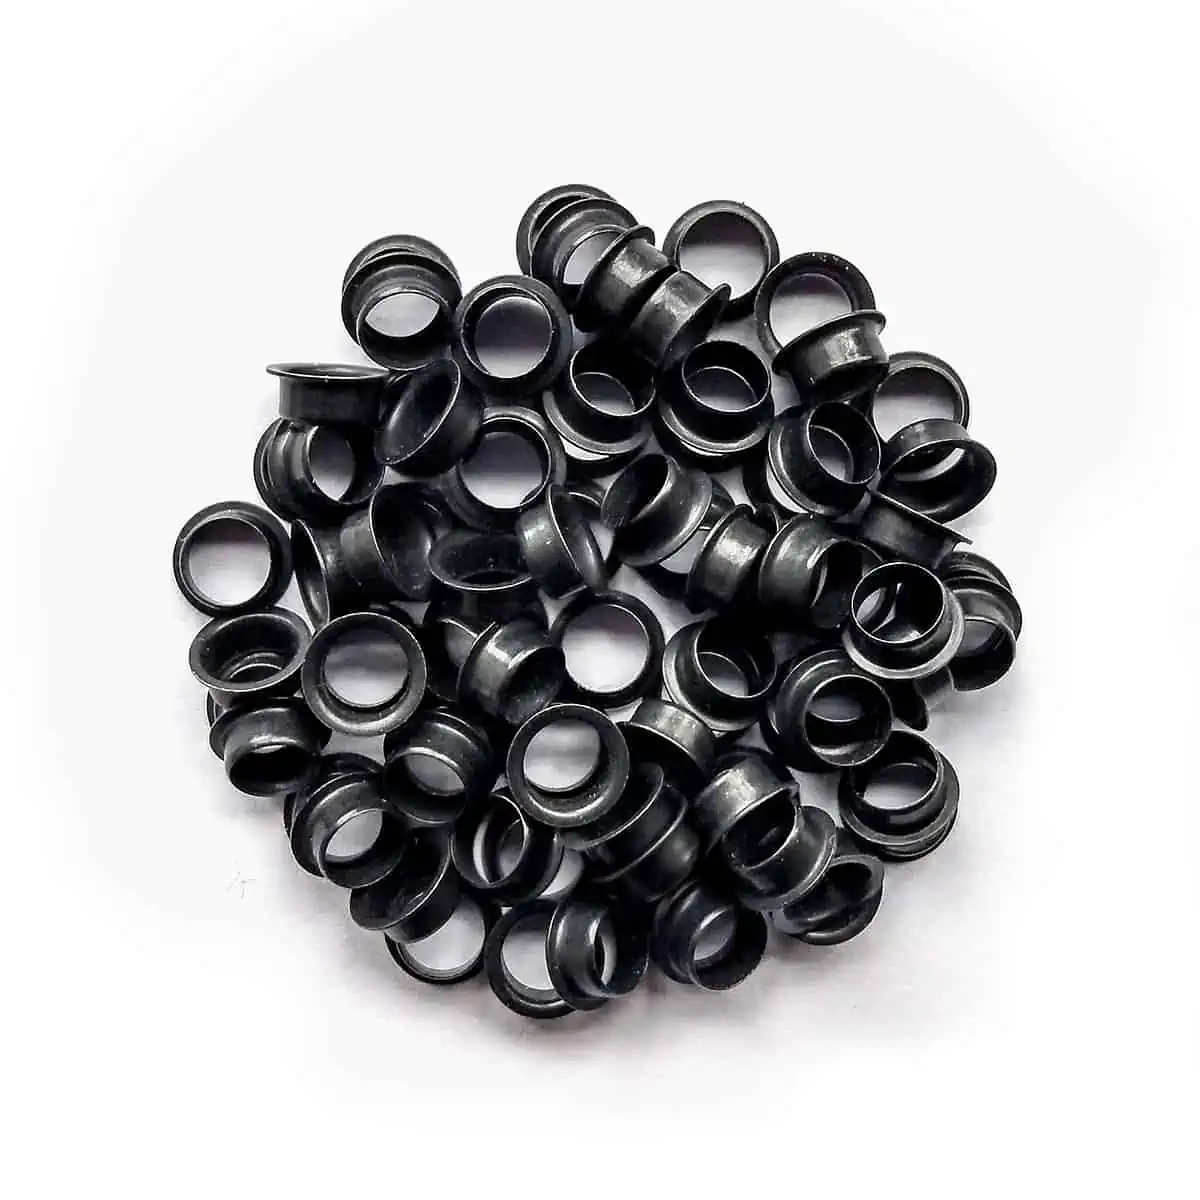 A pile of M&F Stringing's black eyelets.